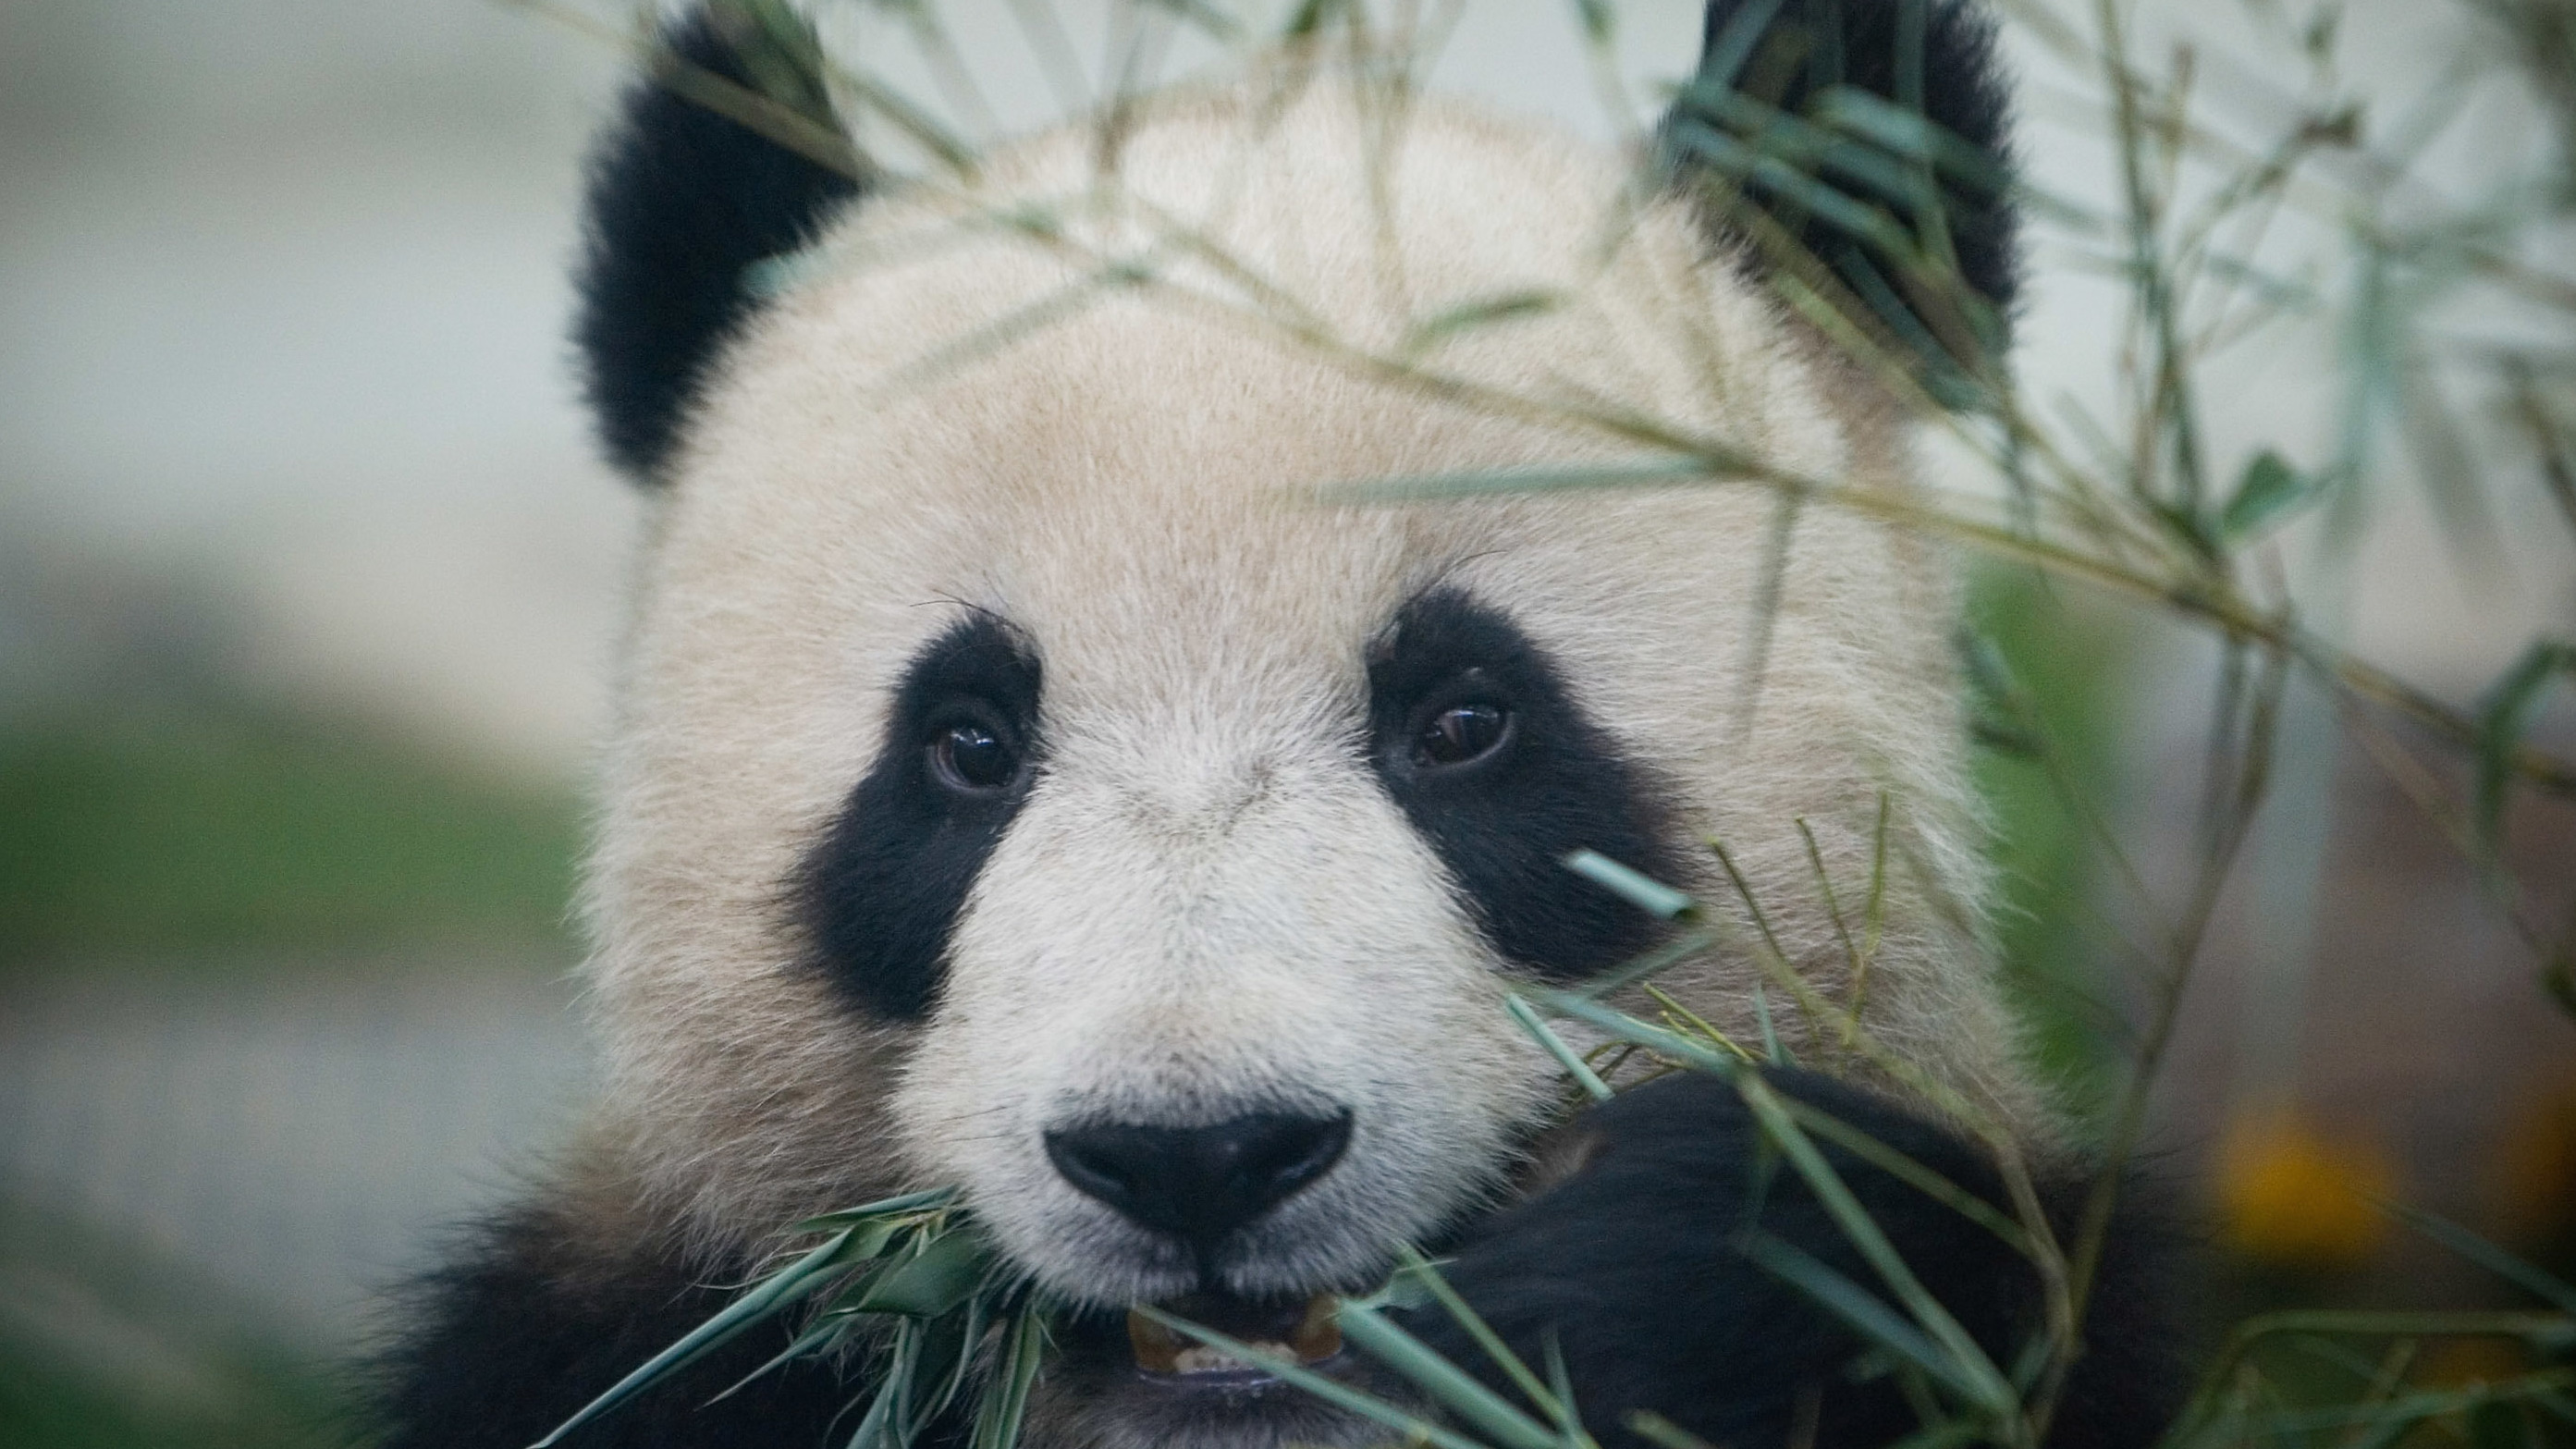 Are giant pandas endangered 2021?